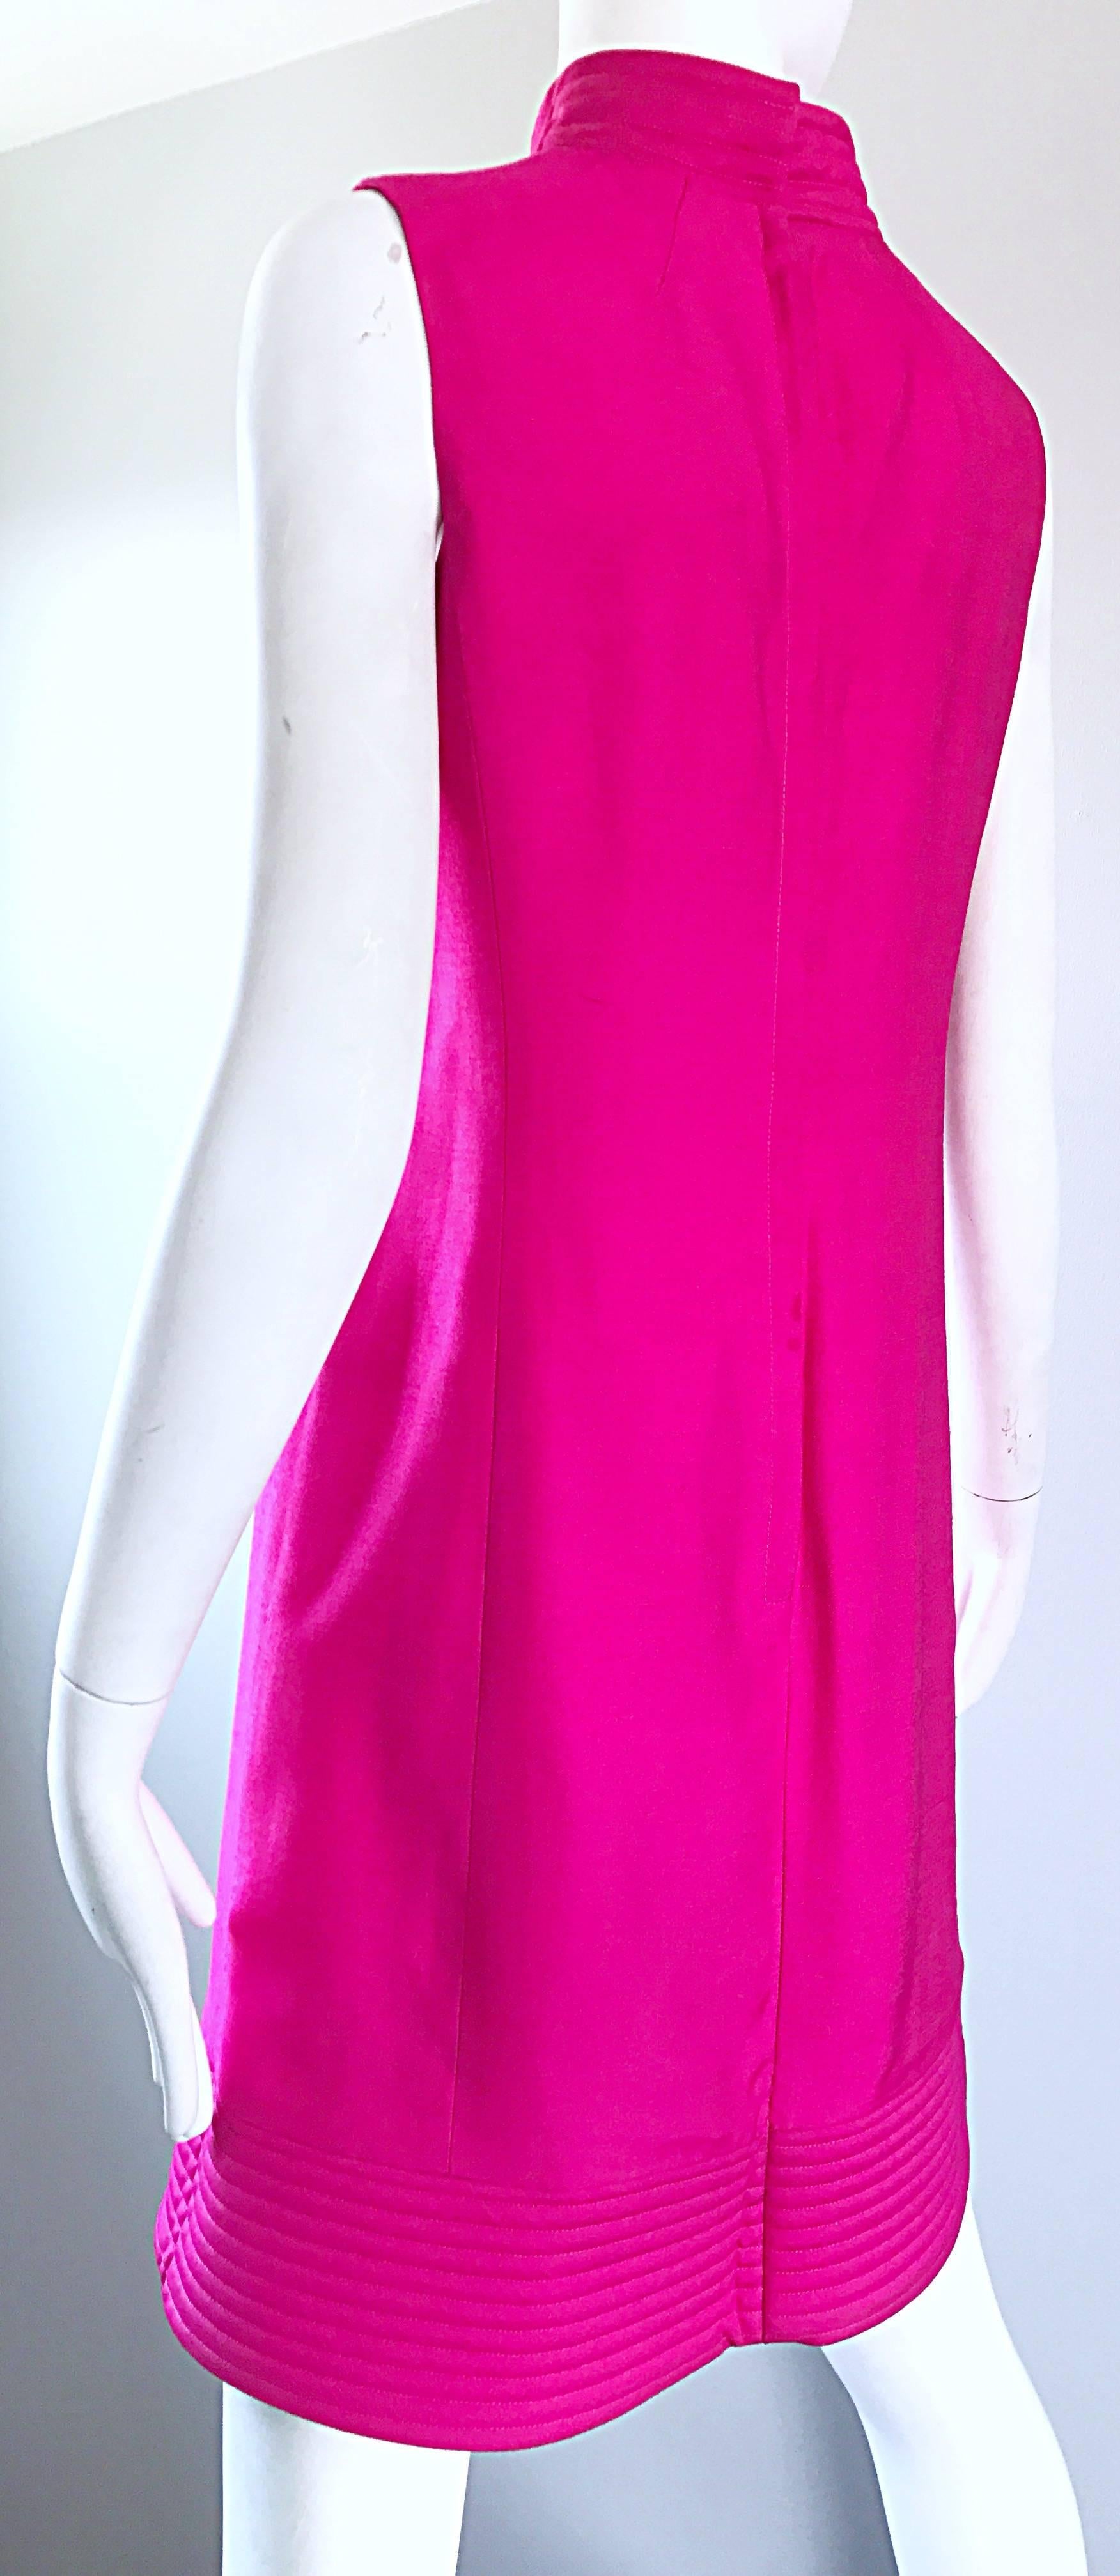 Chic 1960s Shocking Hot Pink Sleeveless Fuchsia Vintage High Neck Shift Dress 2